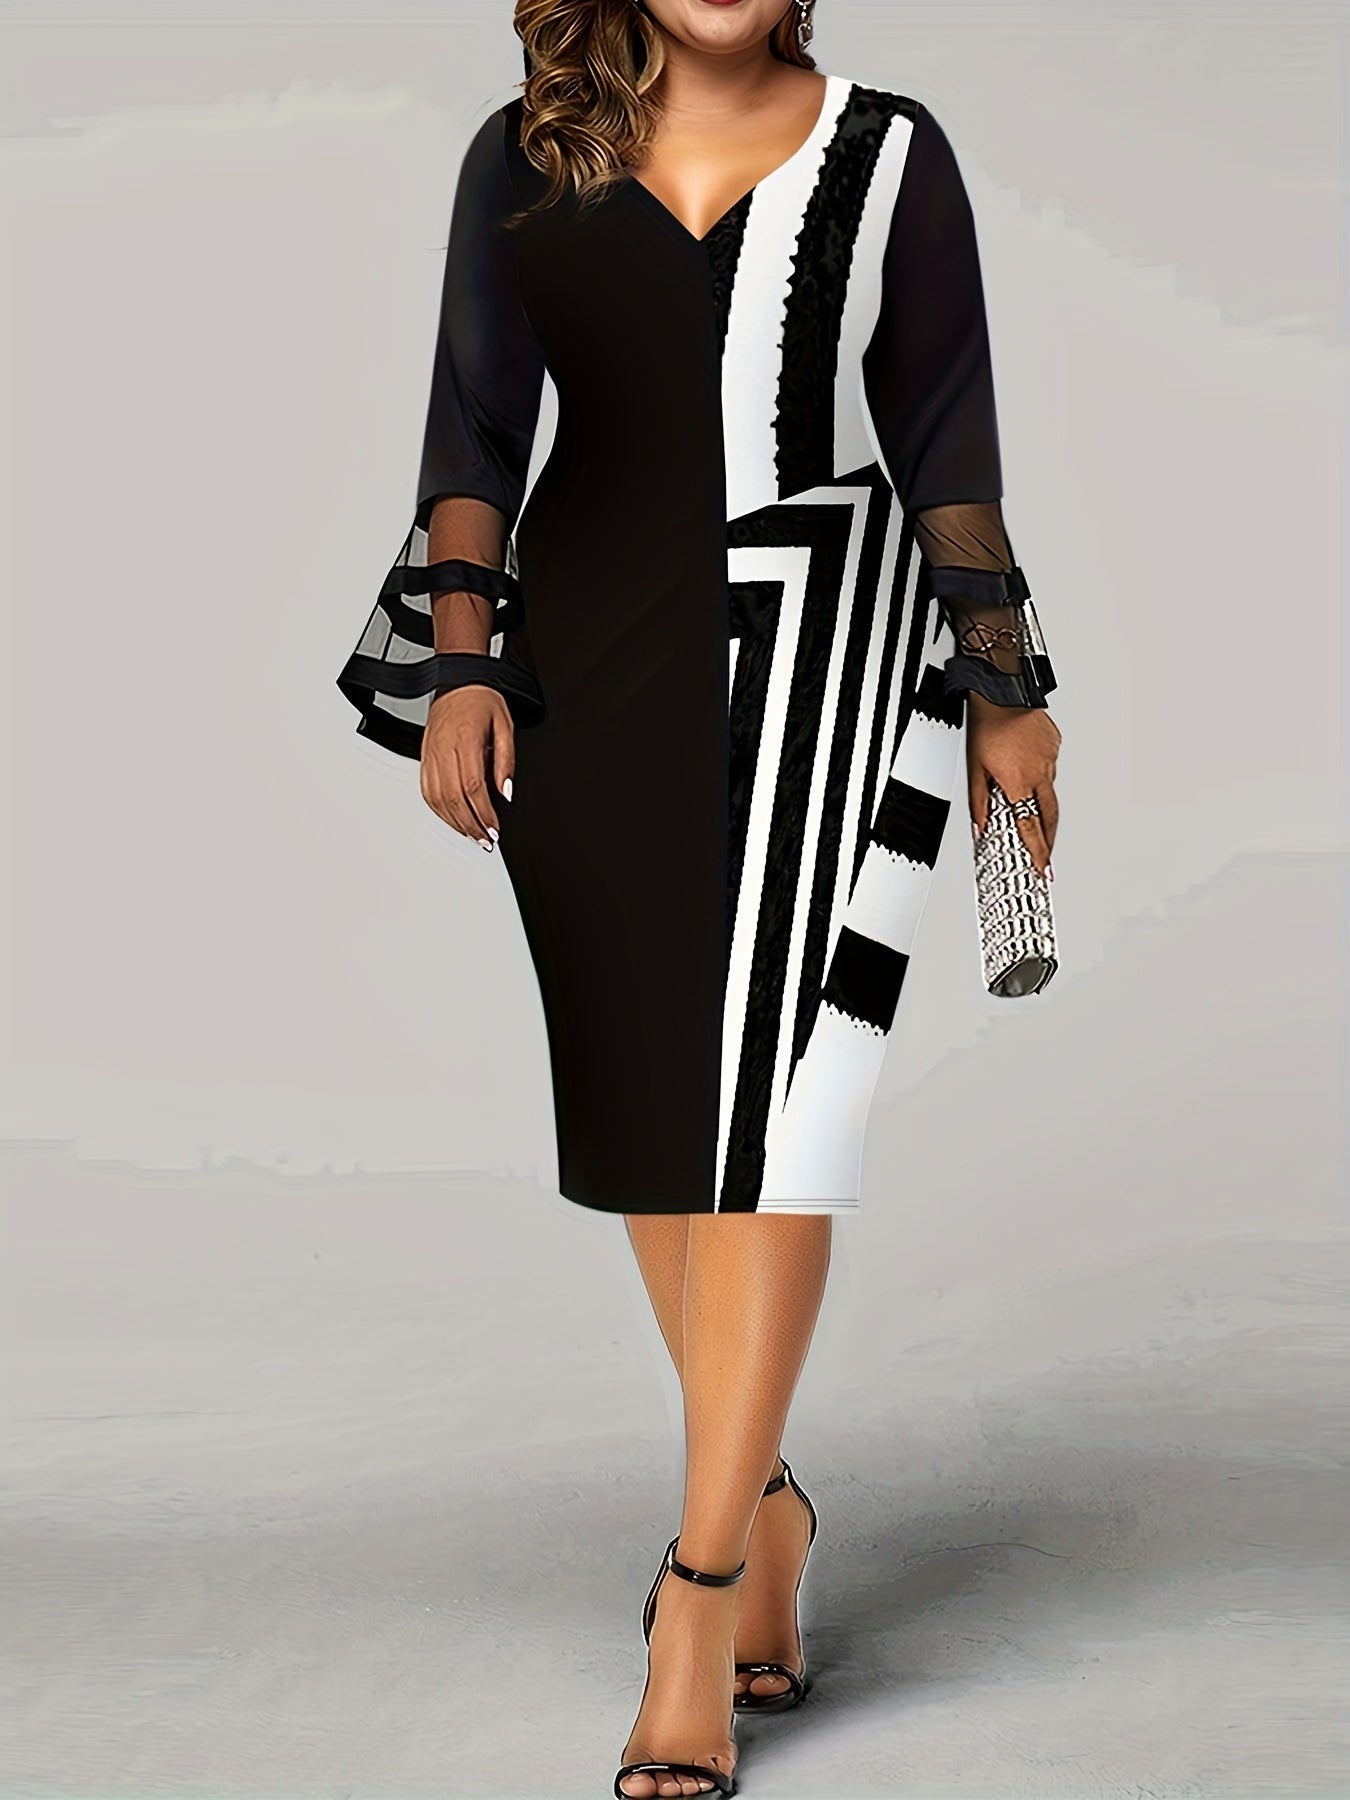 Plus Size Casual Party Dress, Women's Plus Colorblock Stripe Print Contrast Mesh Bell Sleeve V Neck Medium Stretch Midi Slim Fit Dress